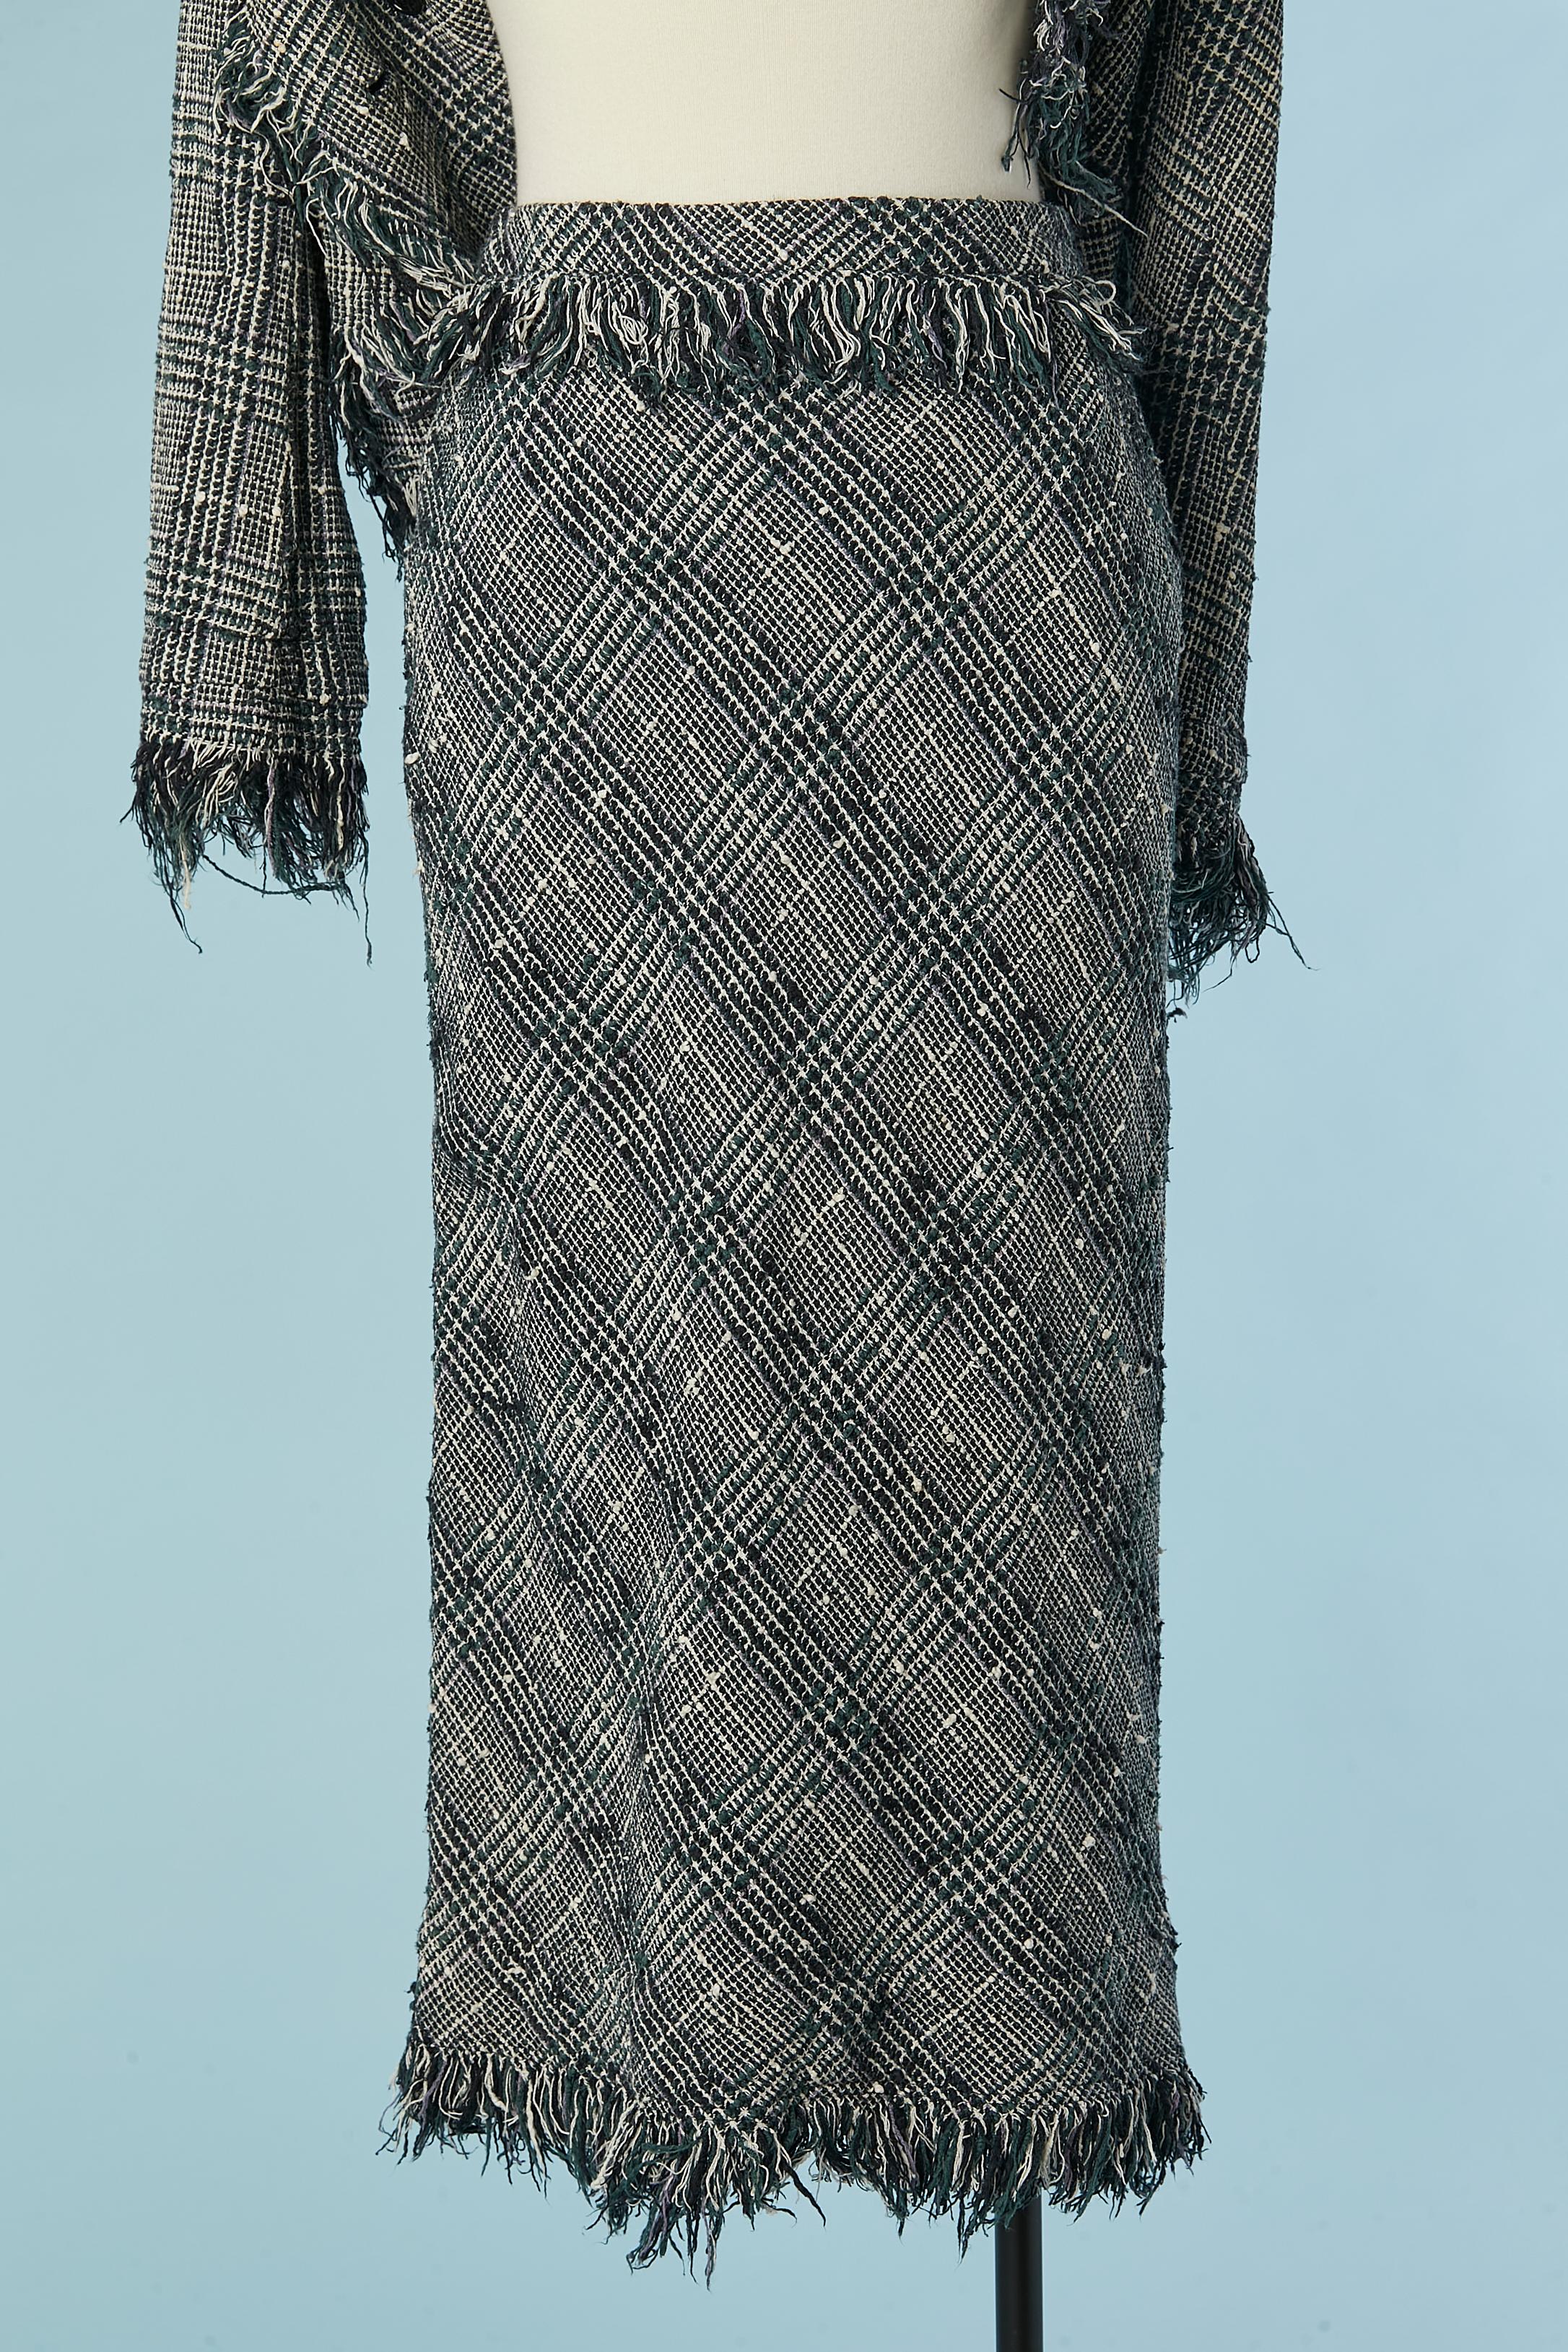 Cotton tweed skirt suit with fringes edges Vivian Westwood Gold Label  For Sale 3